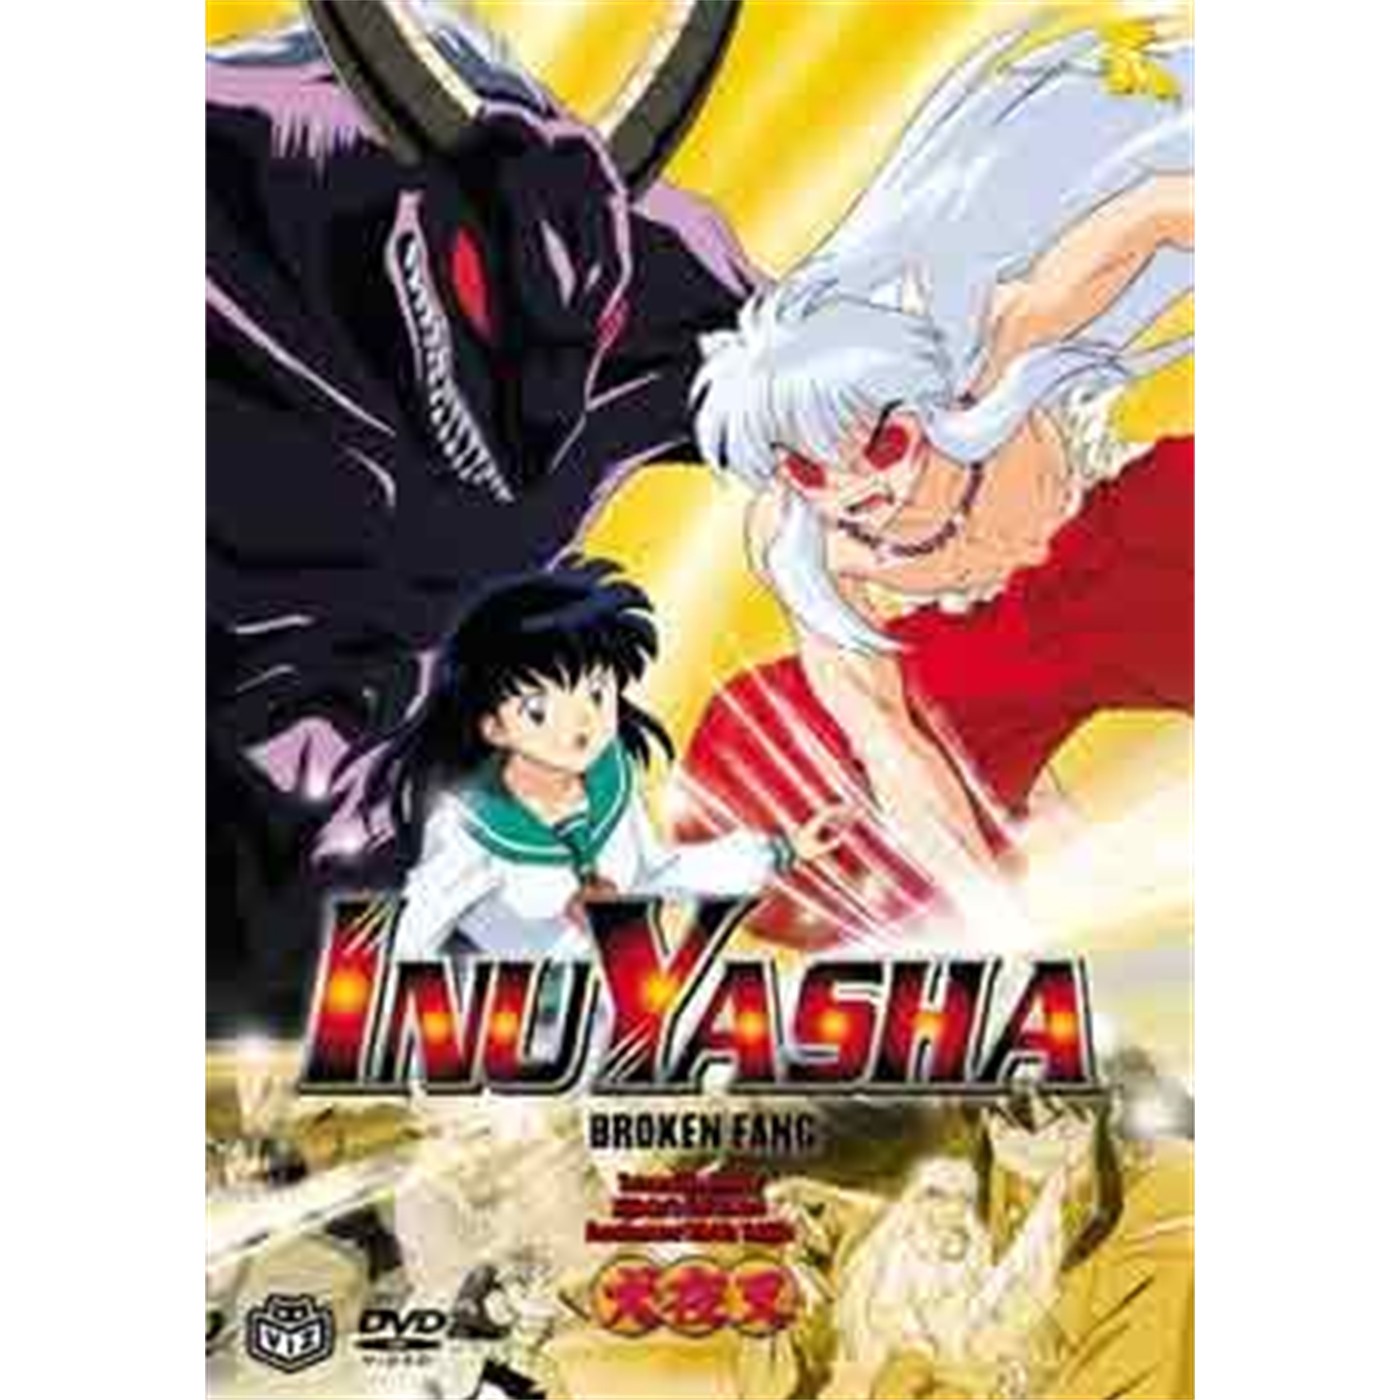 InuYasha, Vol. 15: Broken Fang (DVD)